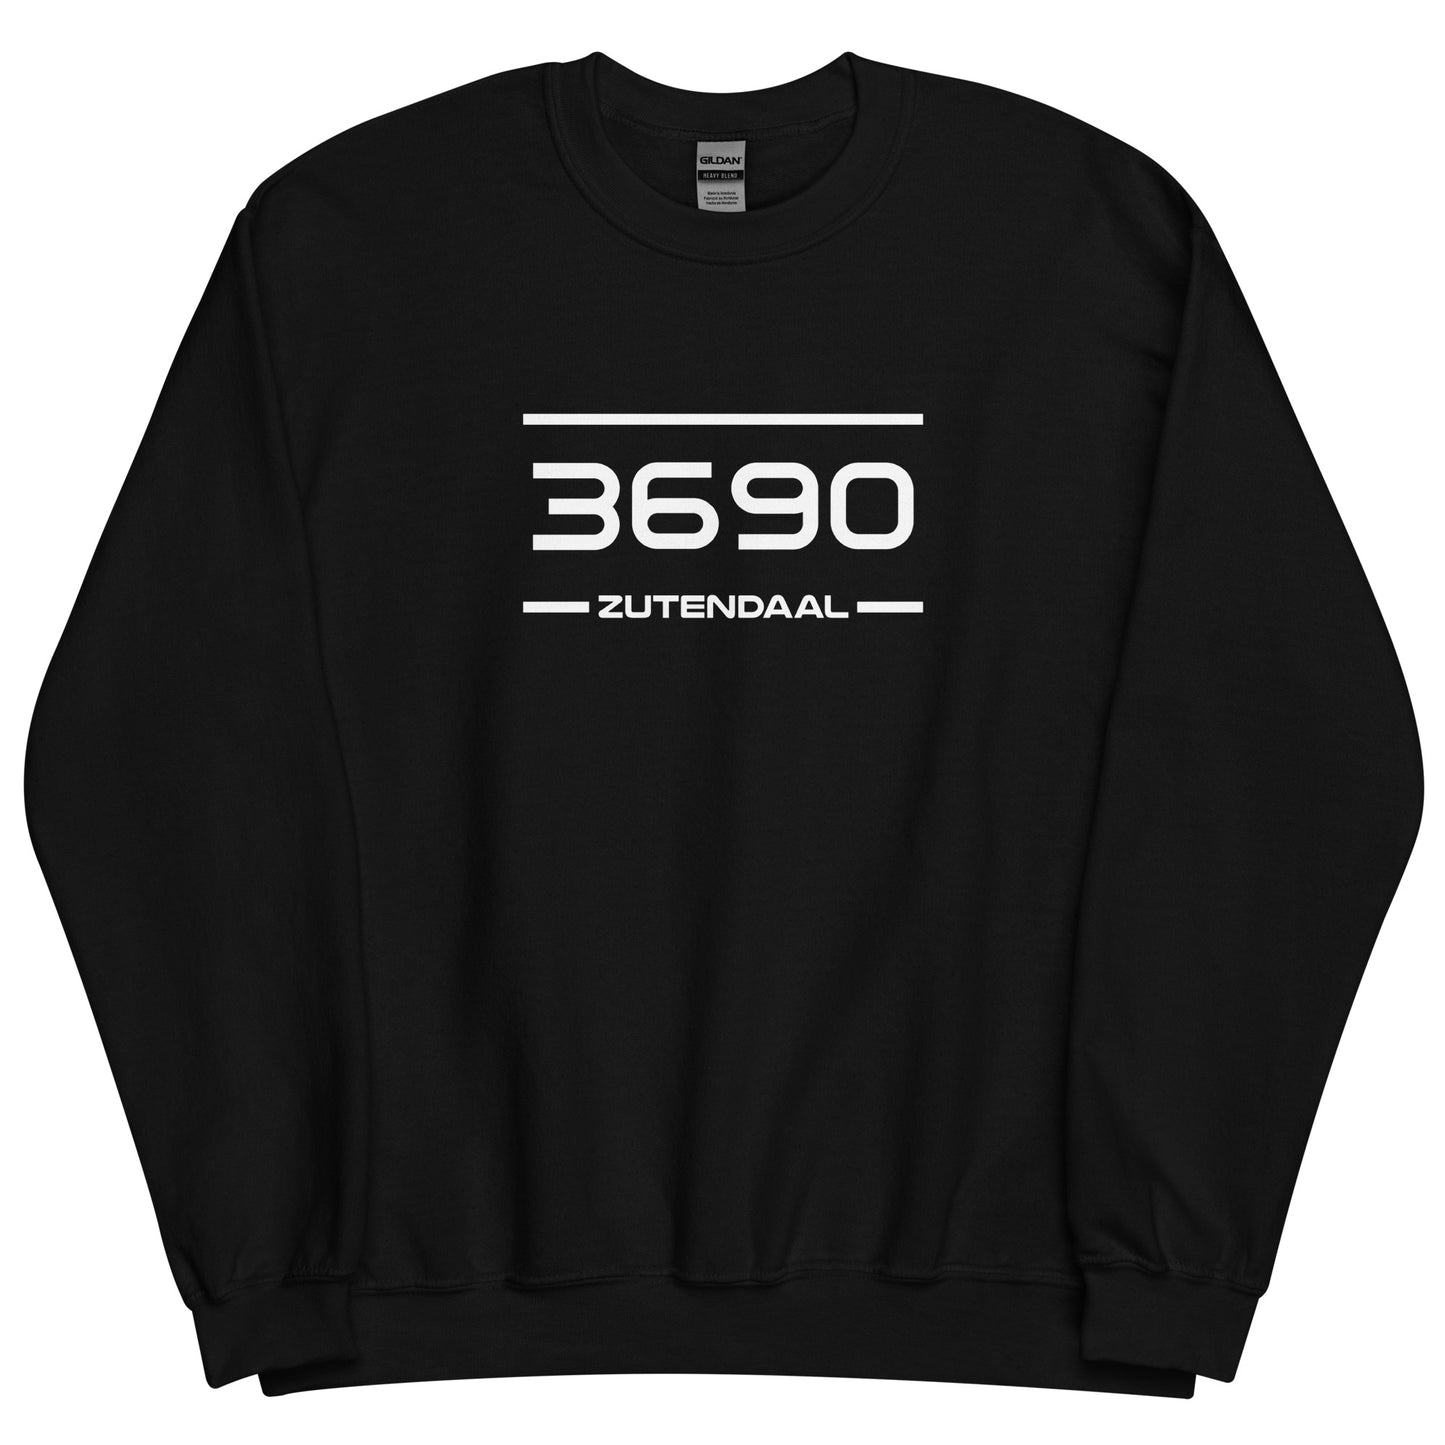 Sweater - 3690 - Zutendaal (M/V)